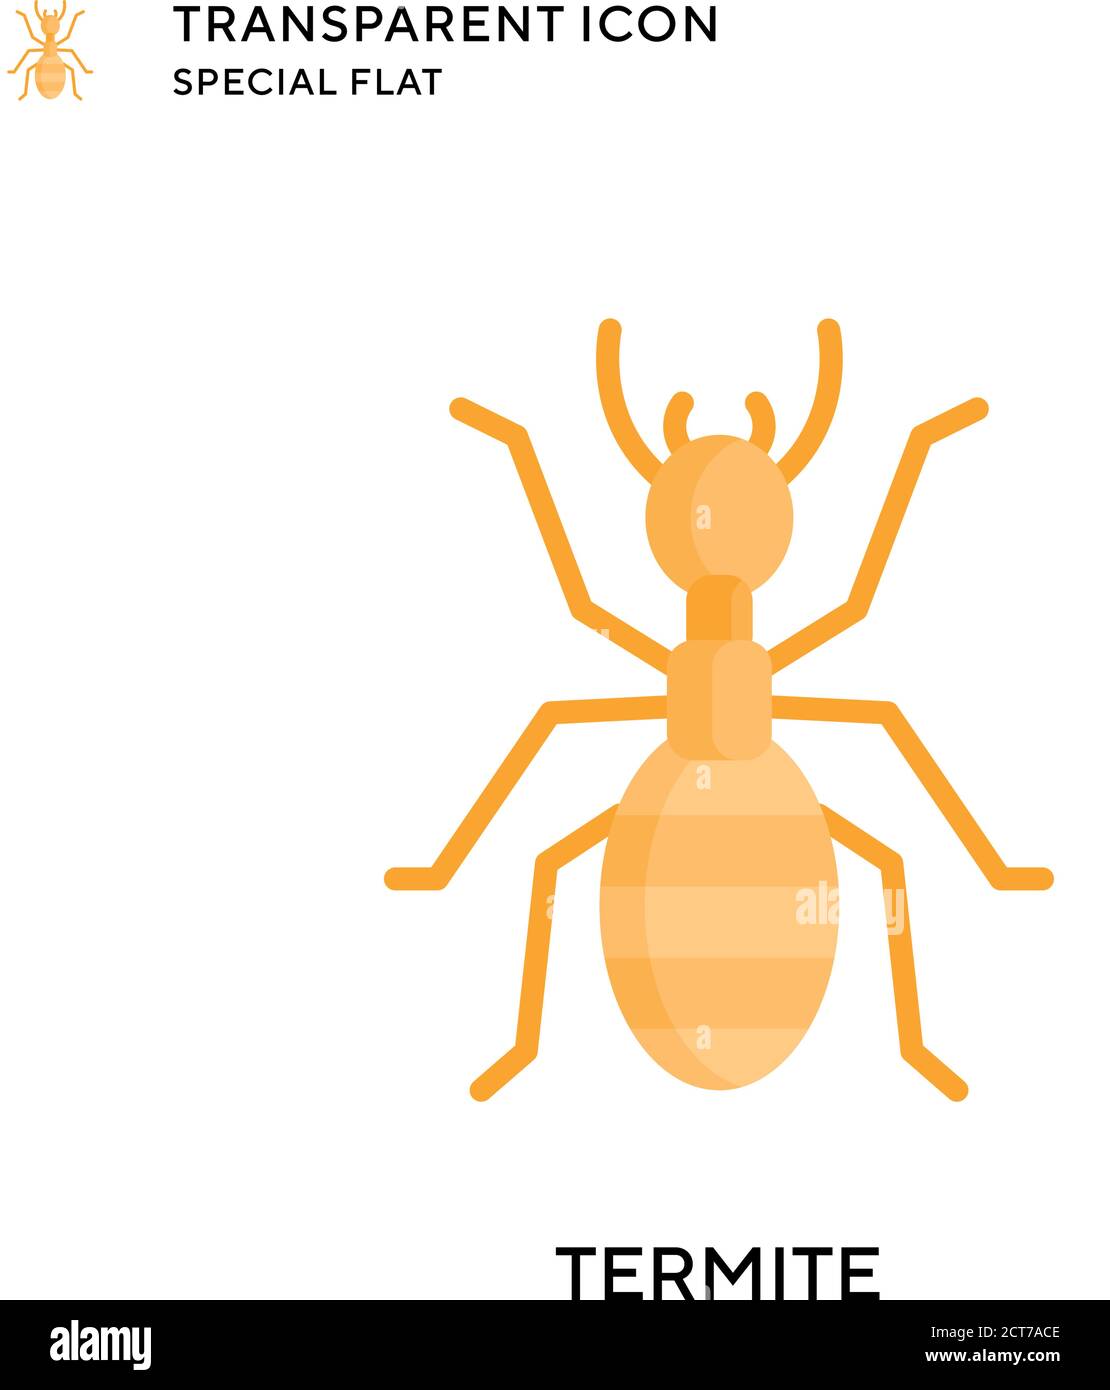 Termite vector icon. Flat style illustration. EPS 10 vector. Stock Vector